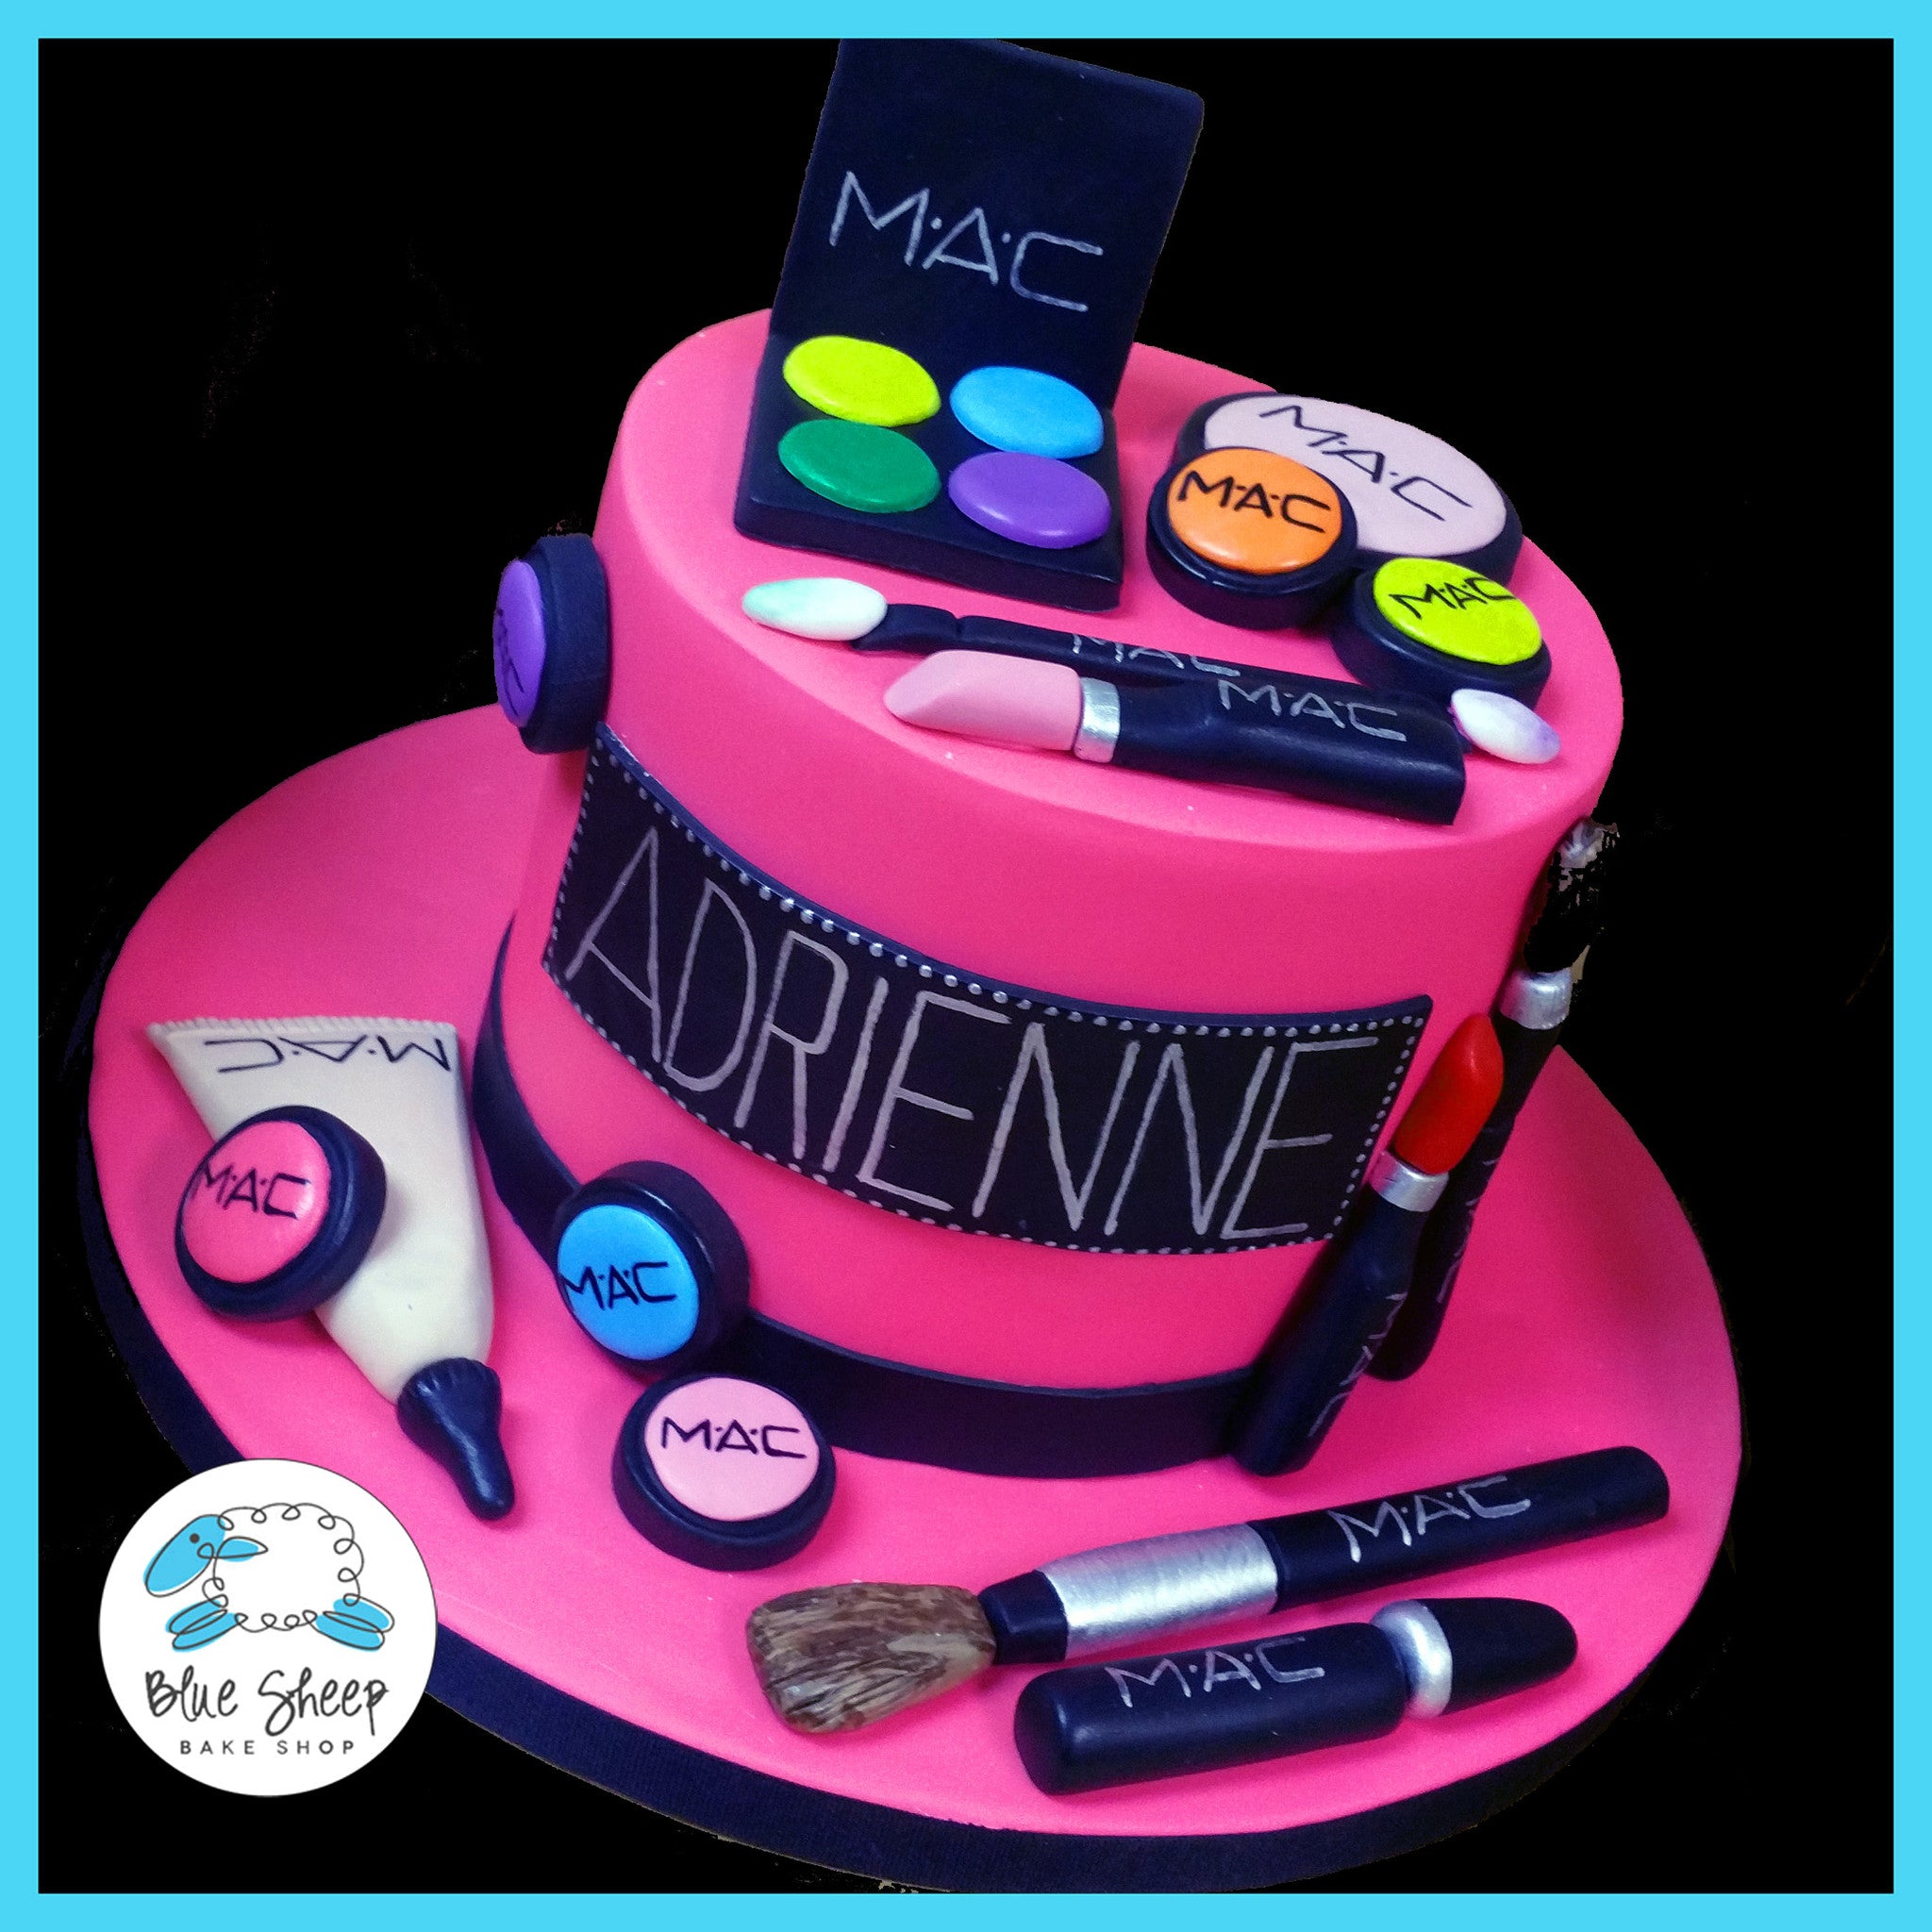 Adrienne S Mac Makeup Birthday Cake